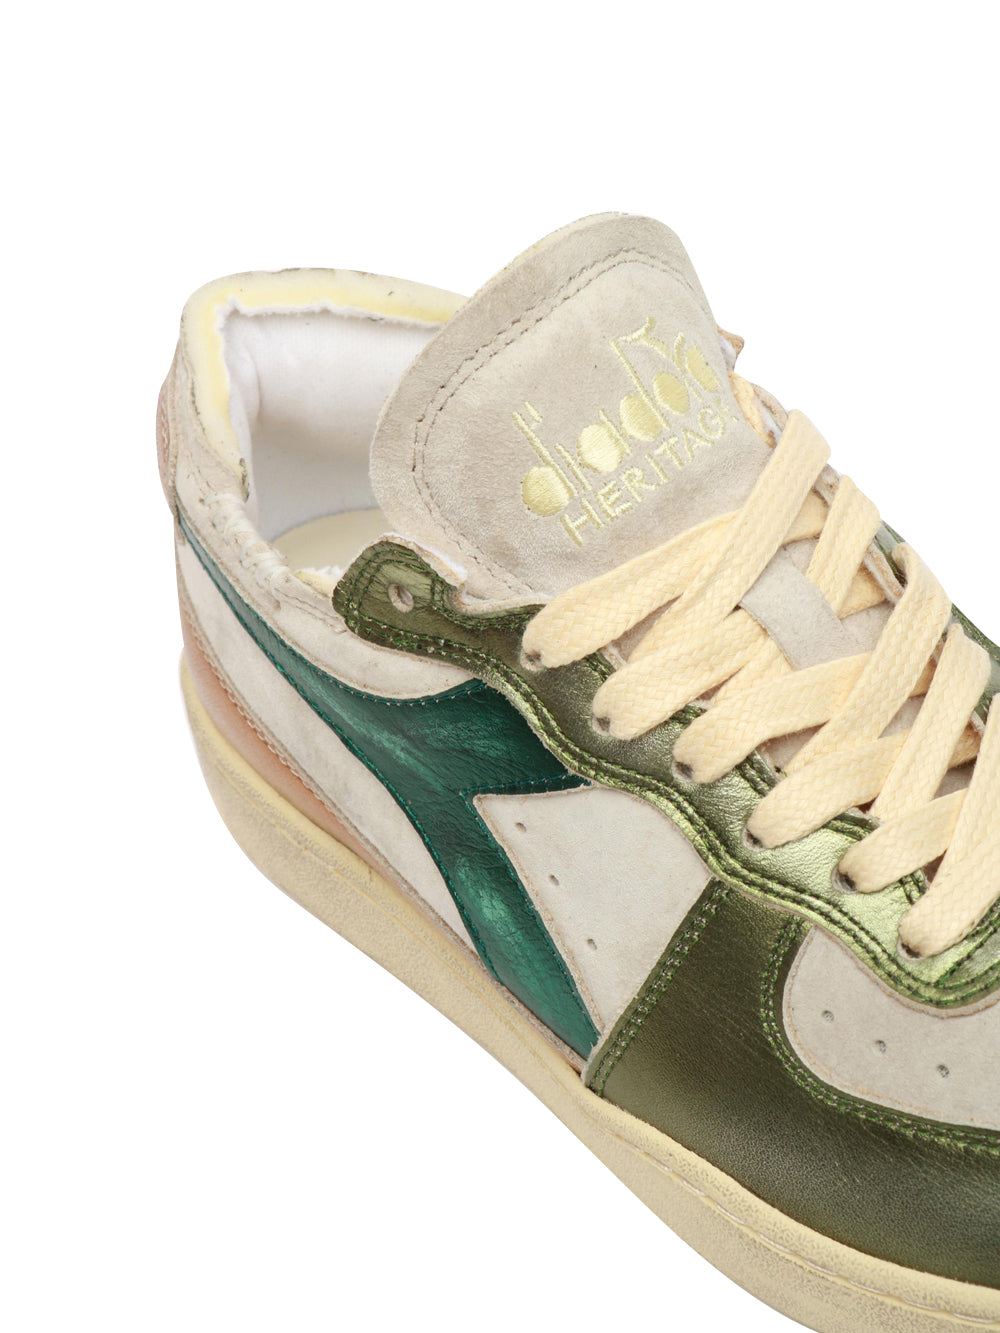 DIADORA HERITAGE Scarpe Sneakers Mi Basket Row Cut Metal in Pelle Bianche e Verdi Grigio/verde/oro